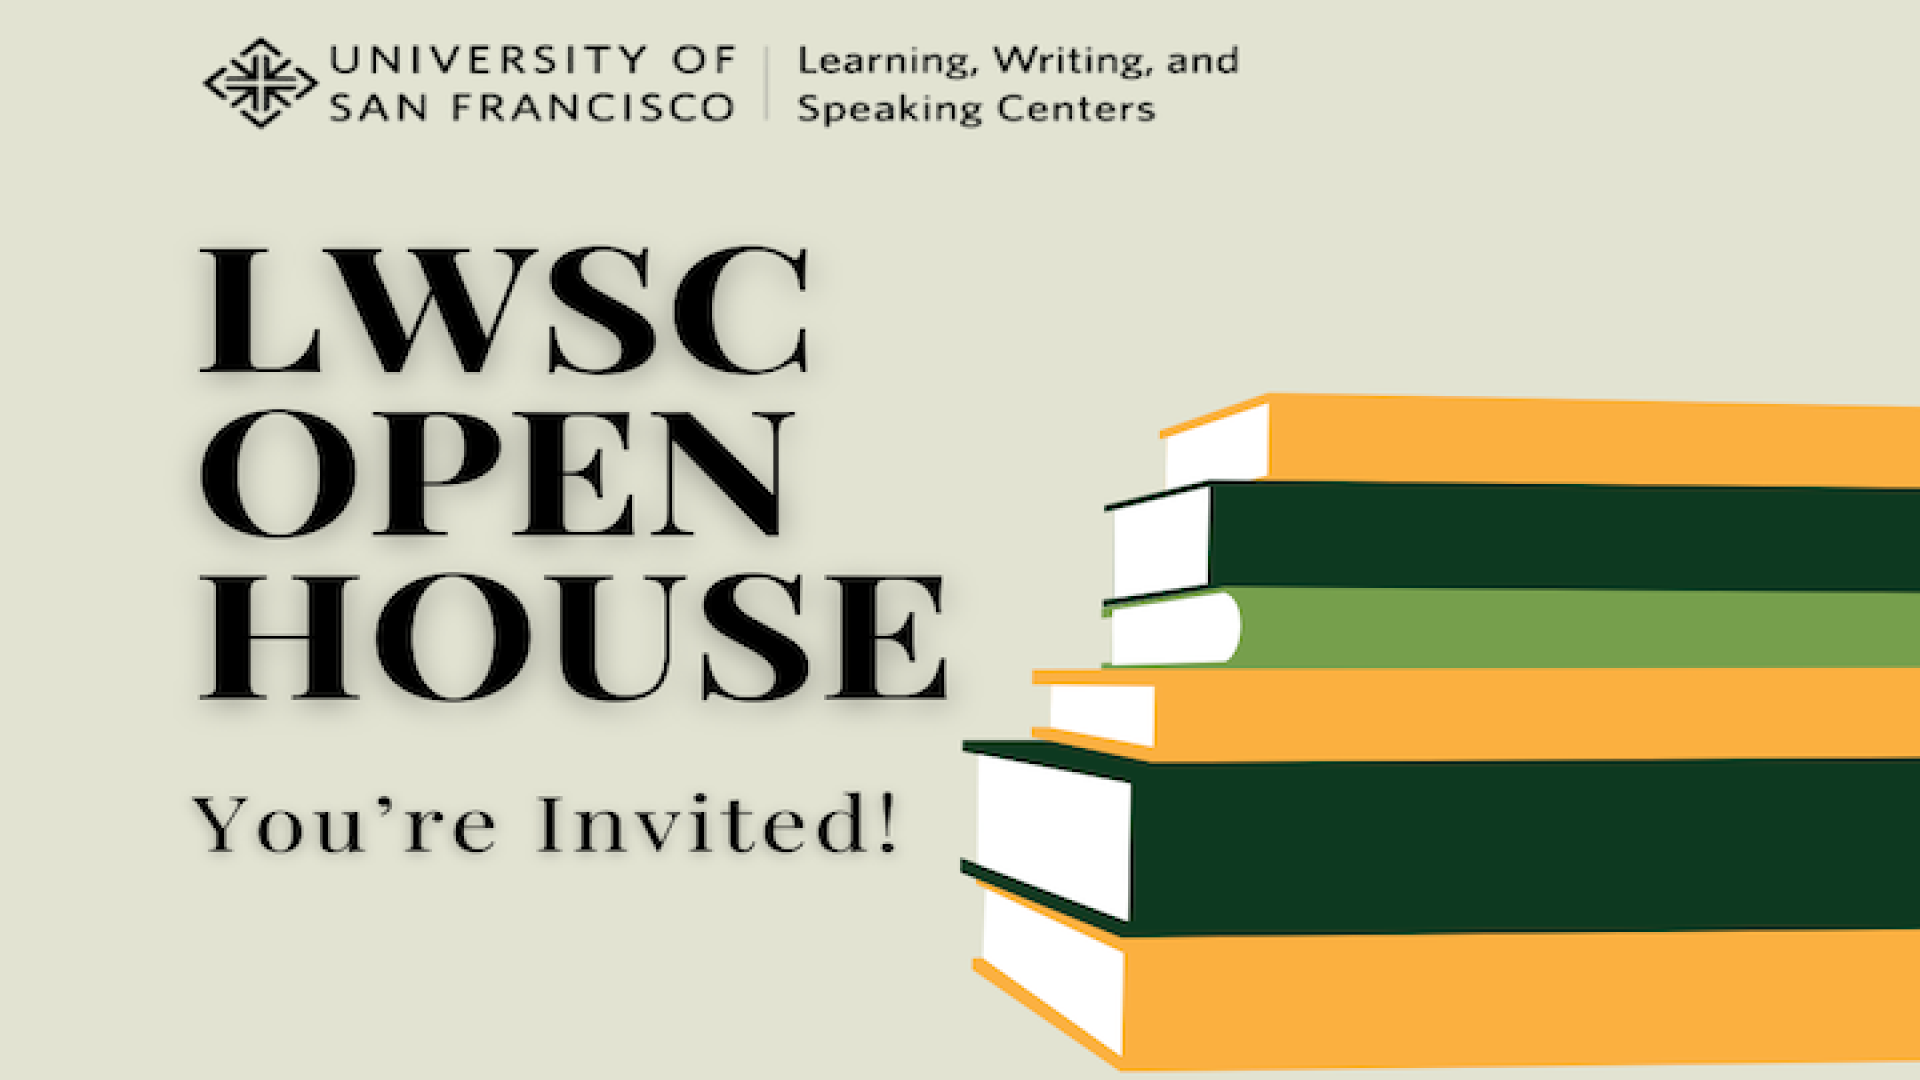 LWSC Open House